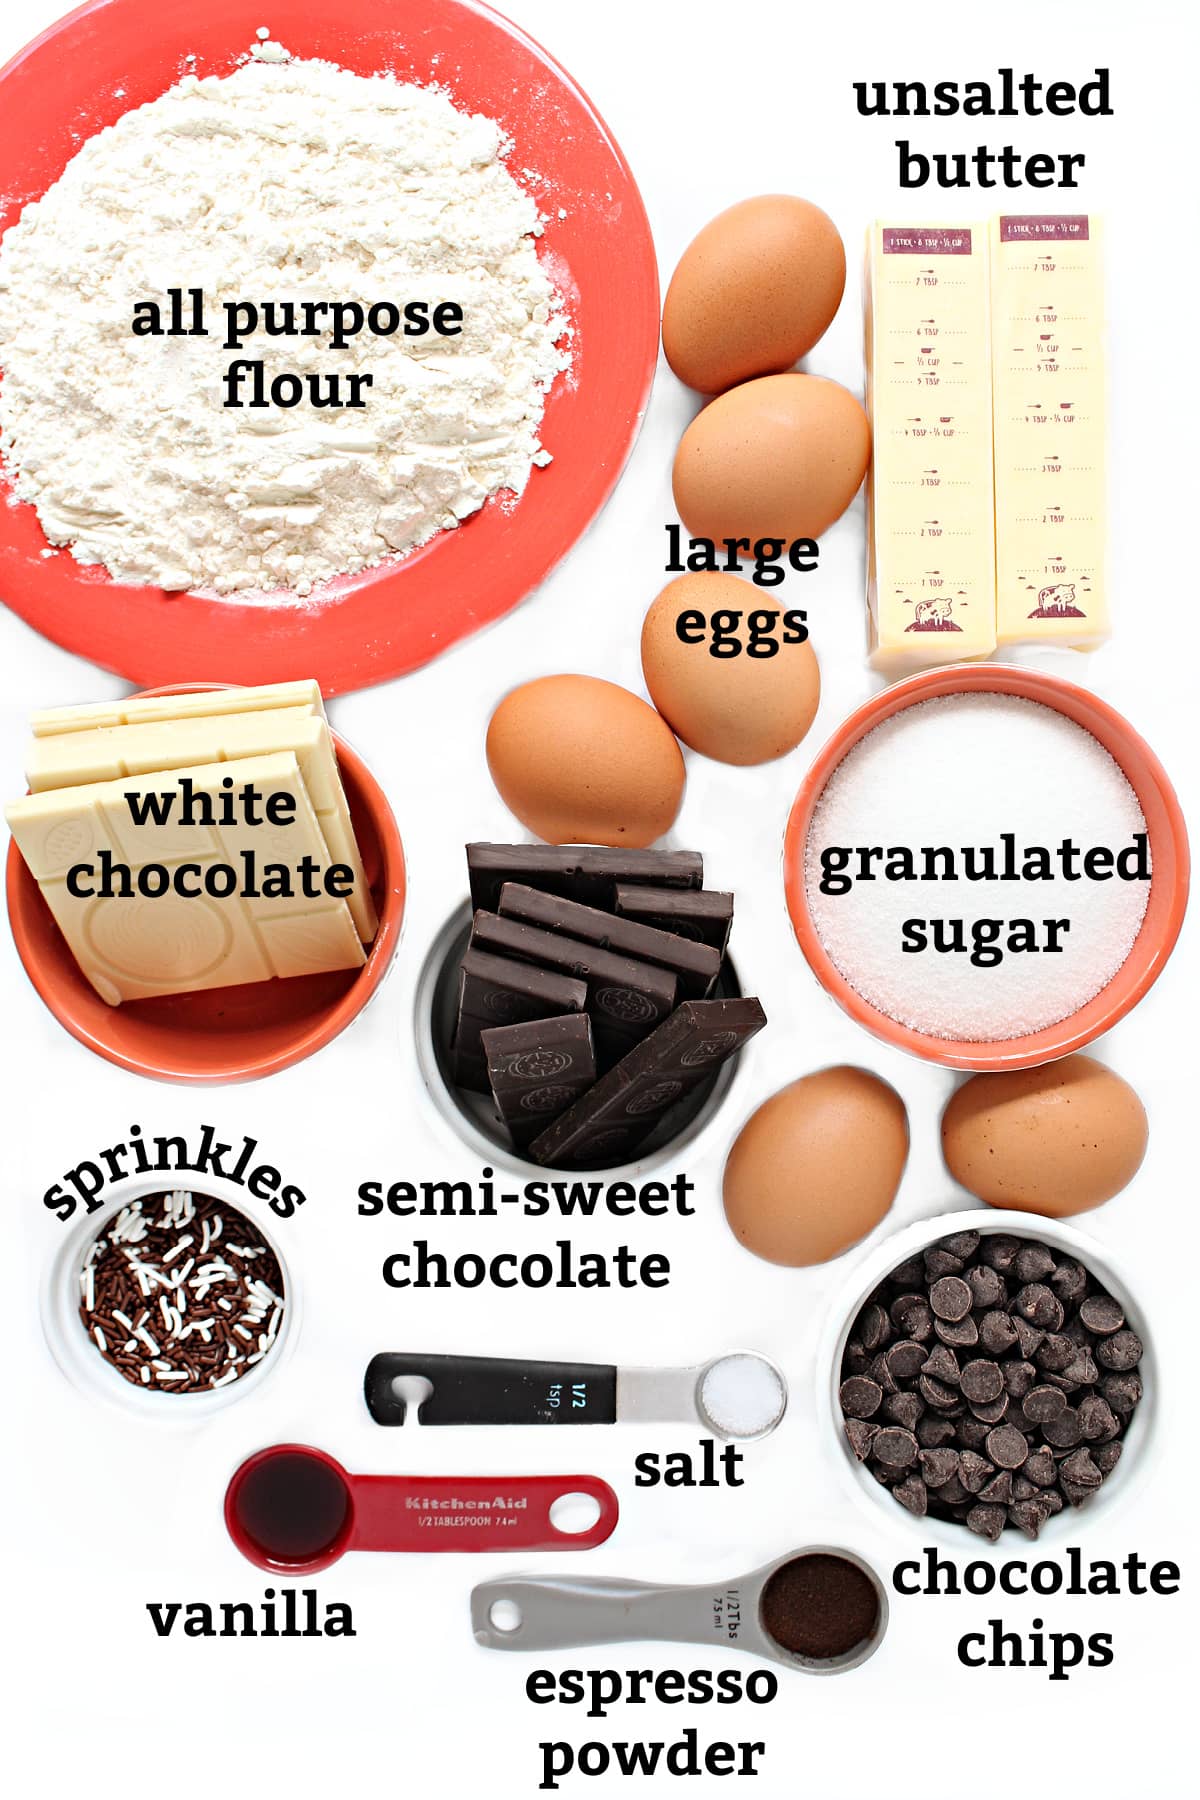 Ingredients: flour, eggs, butter, white chocolate, semi-sweet chocolate, sugar, chocolate chips, salt, vanilla, espresso powder, sprinkles.